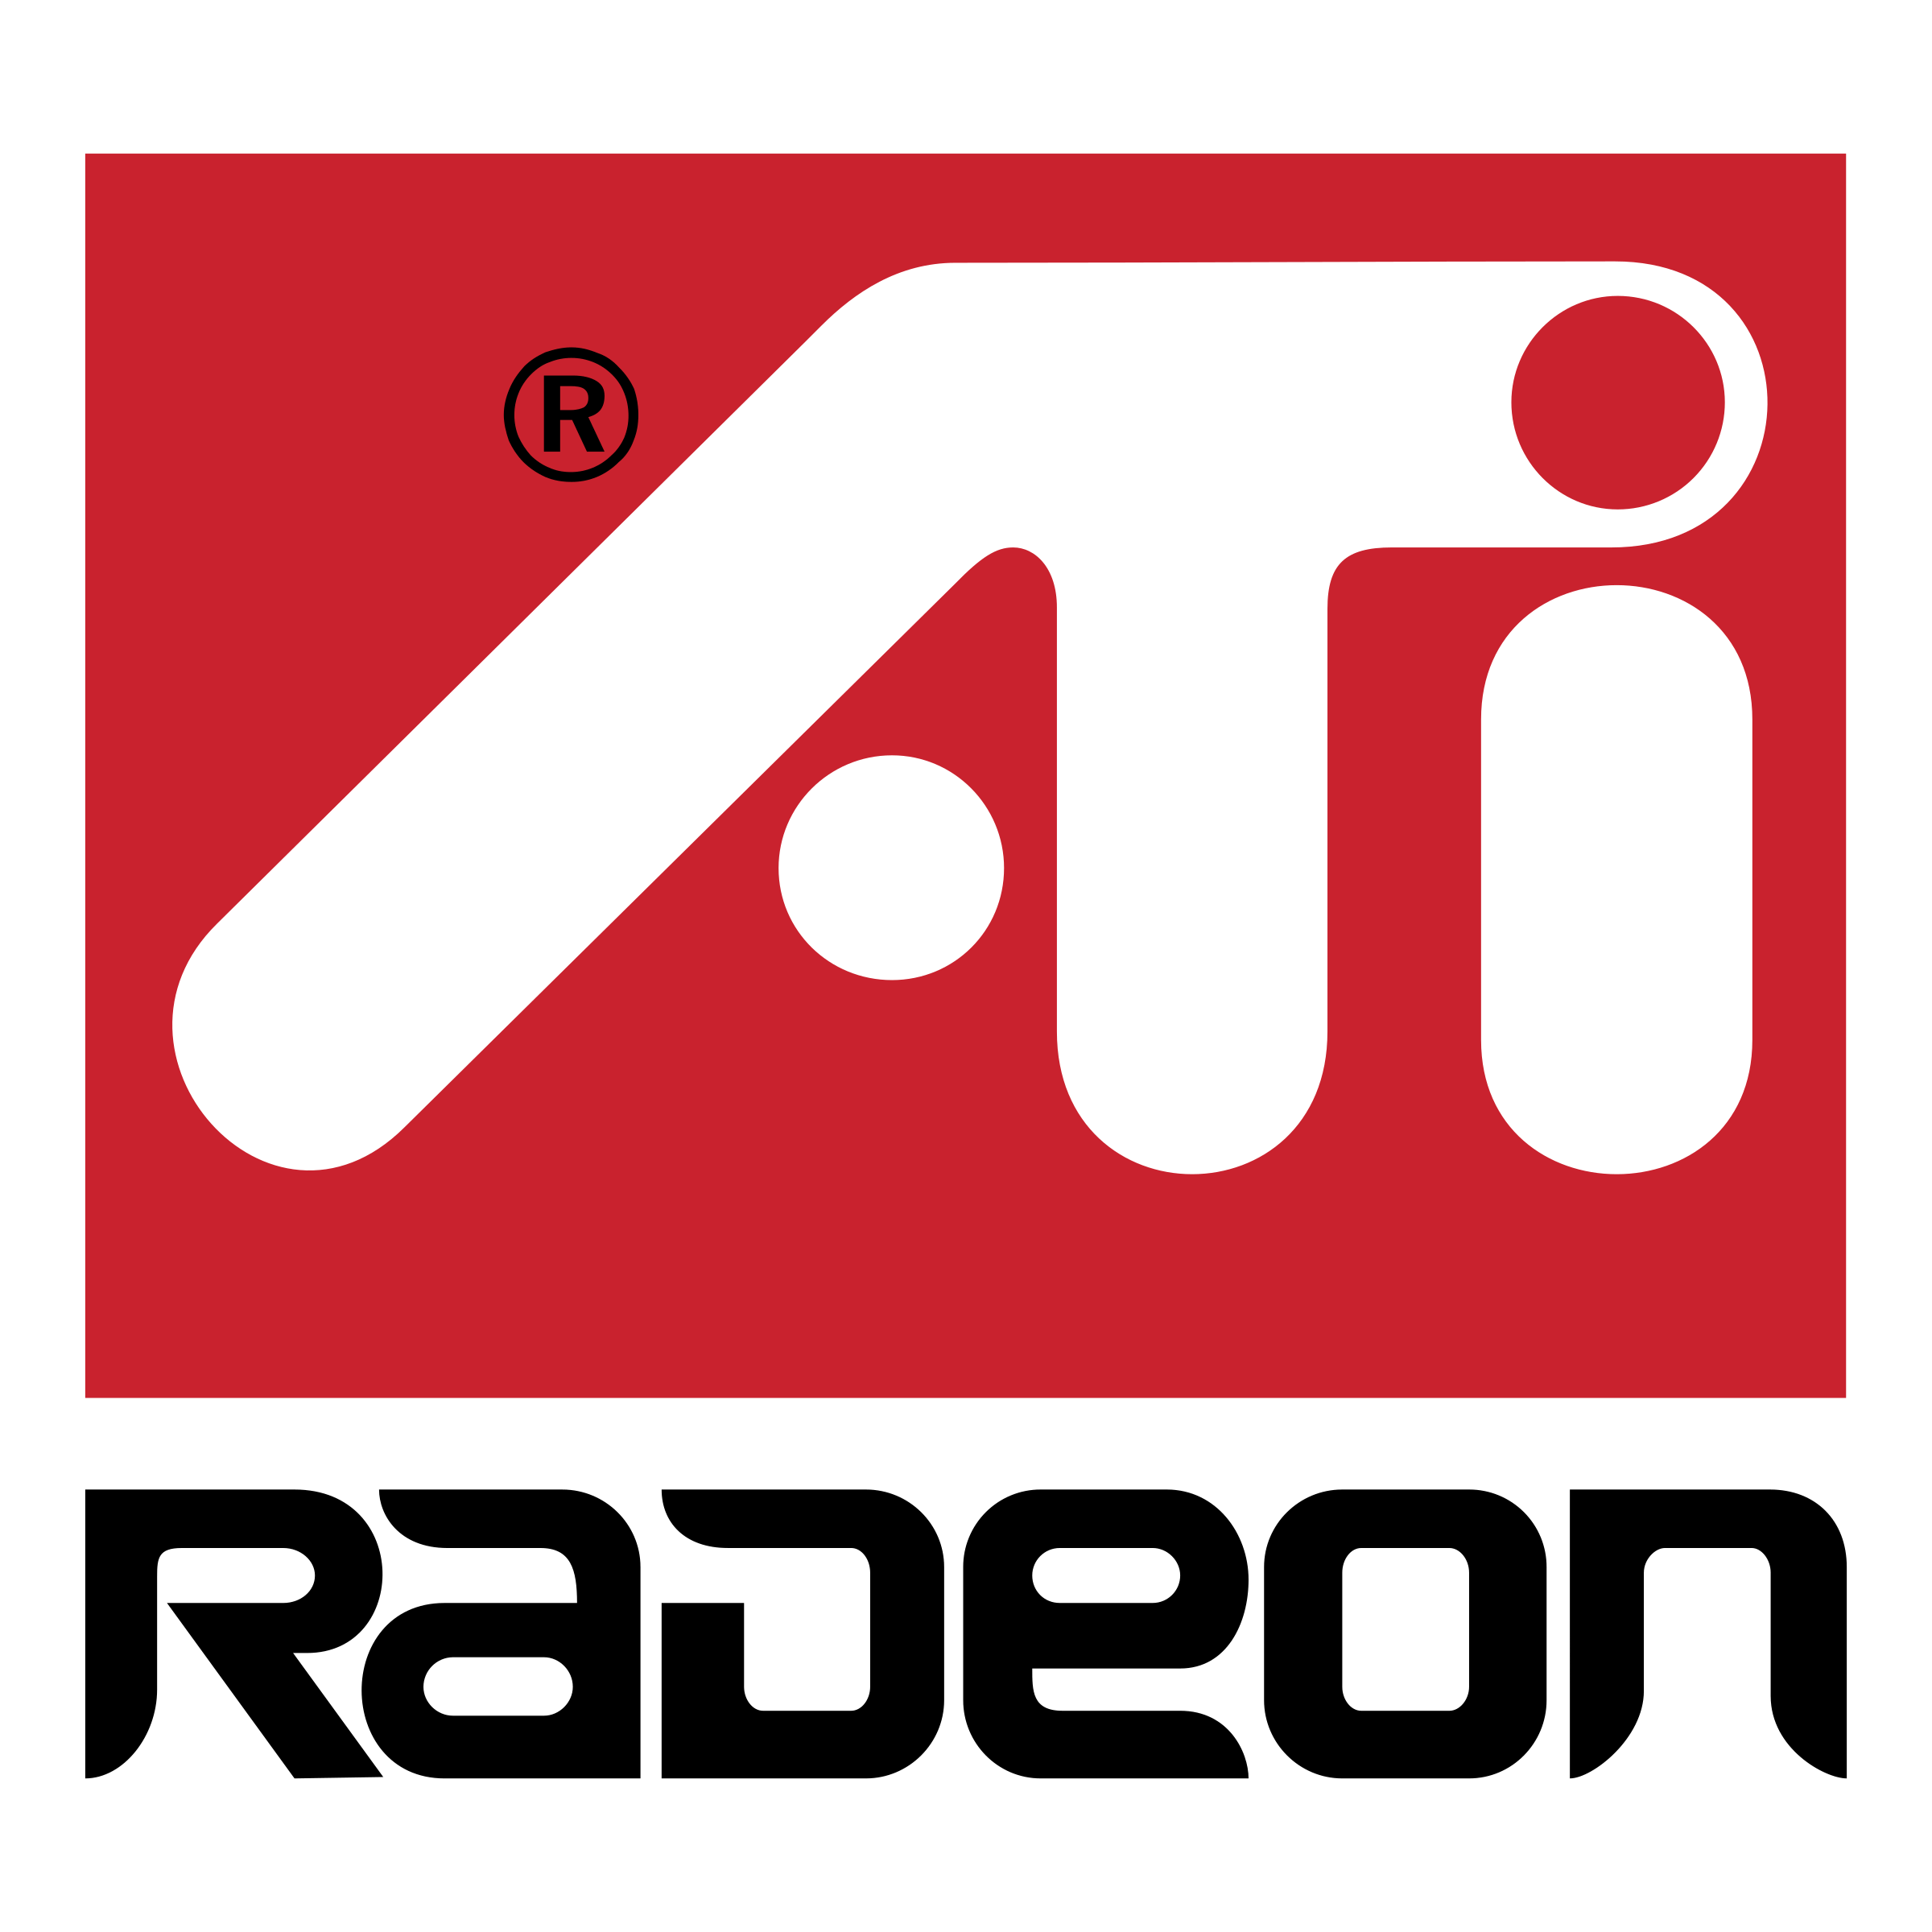 ATI Logo - ATI Radeon Logo PNG Transparent & SVG Vector - Freebie Supply